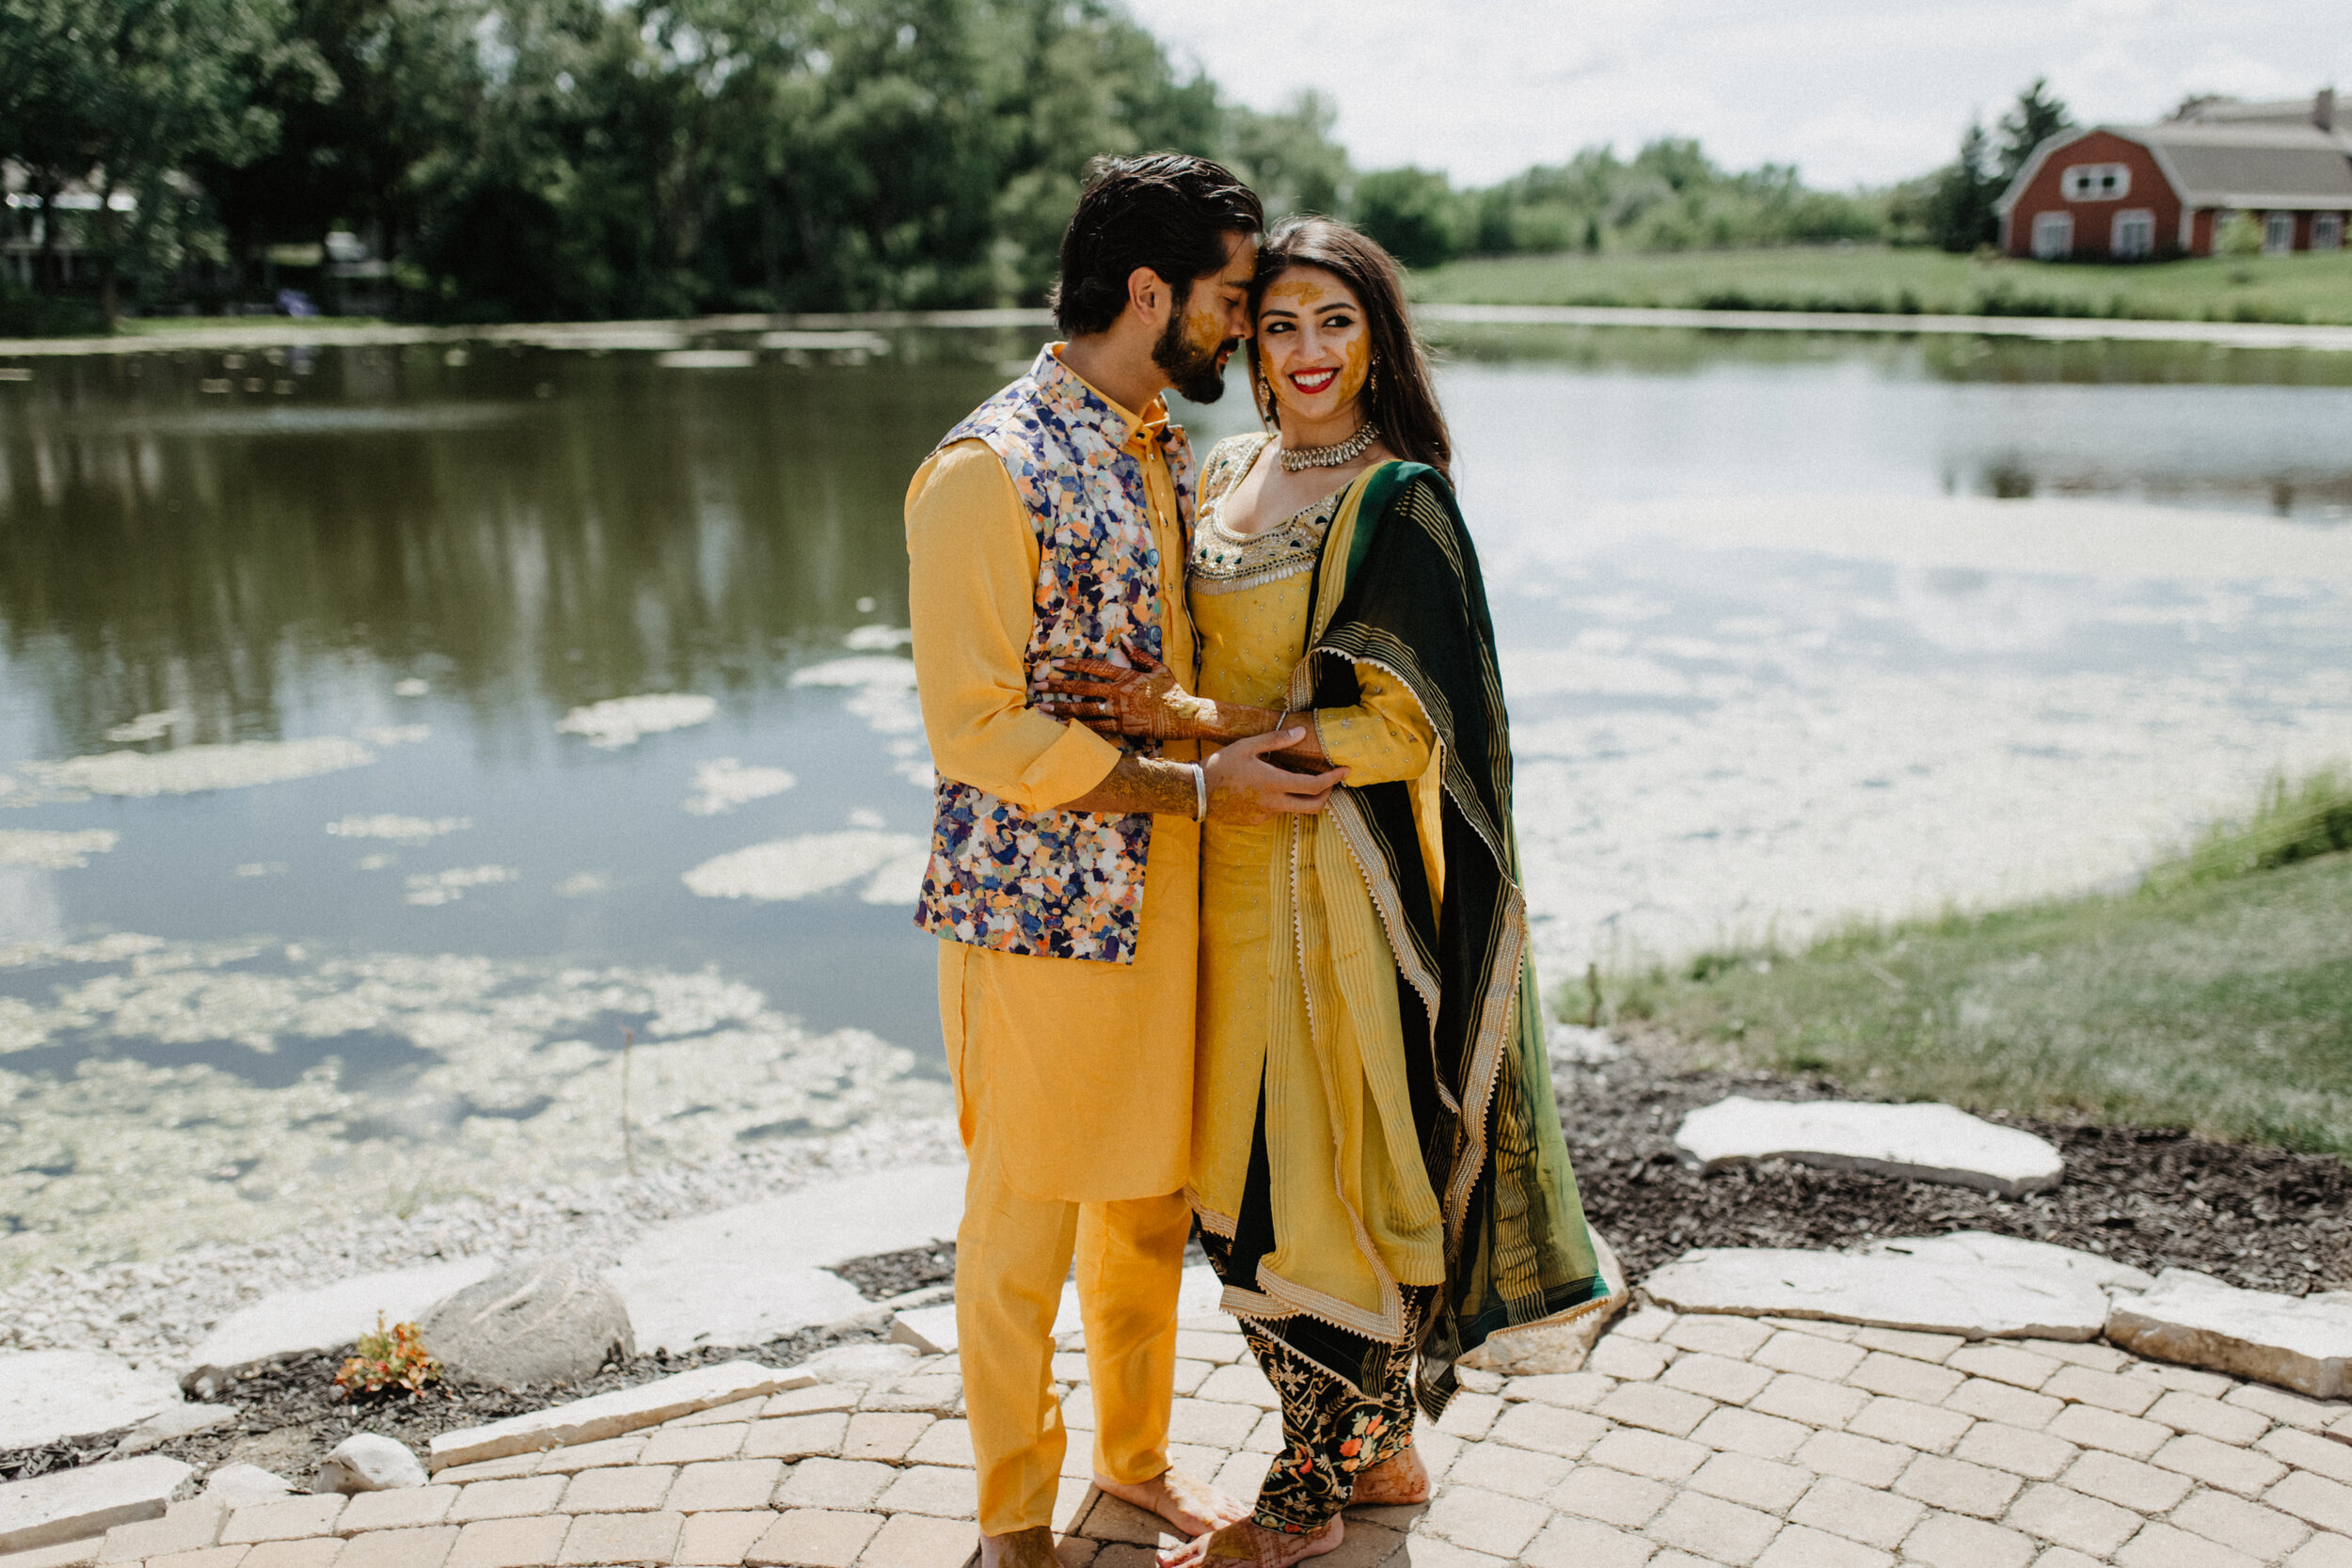 ShadowShinePictures-Sukhi-Balraj-Bains-Kaur-Grand-Rapids-Indian-Wedding-Photography-16.jpg